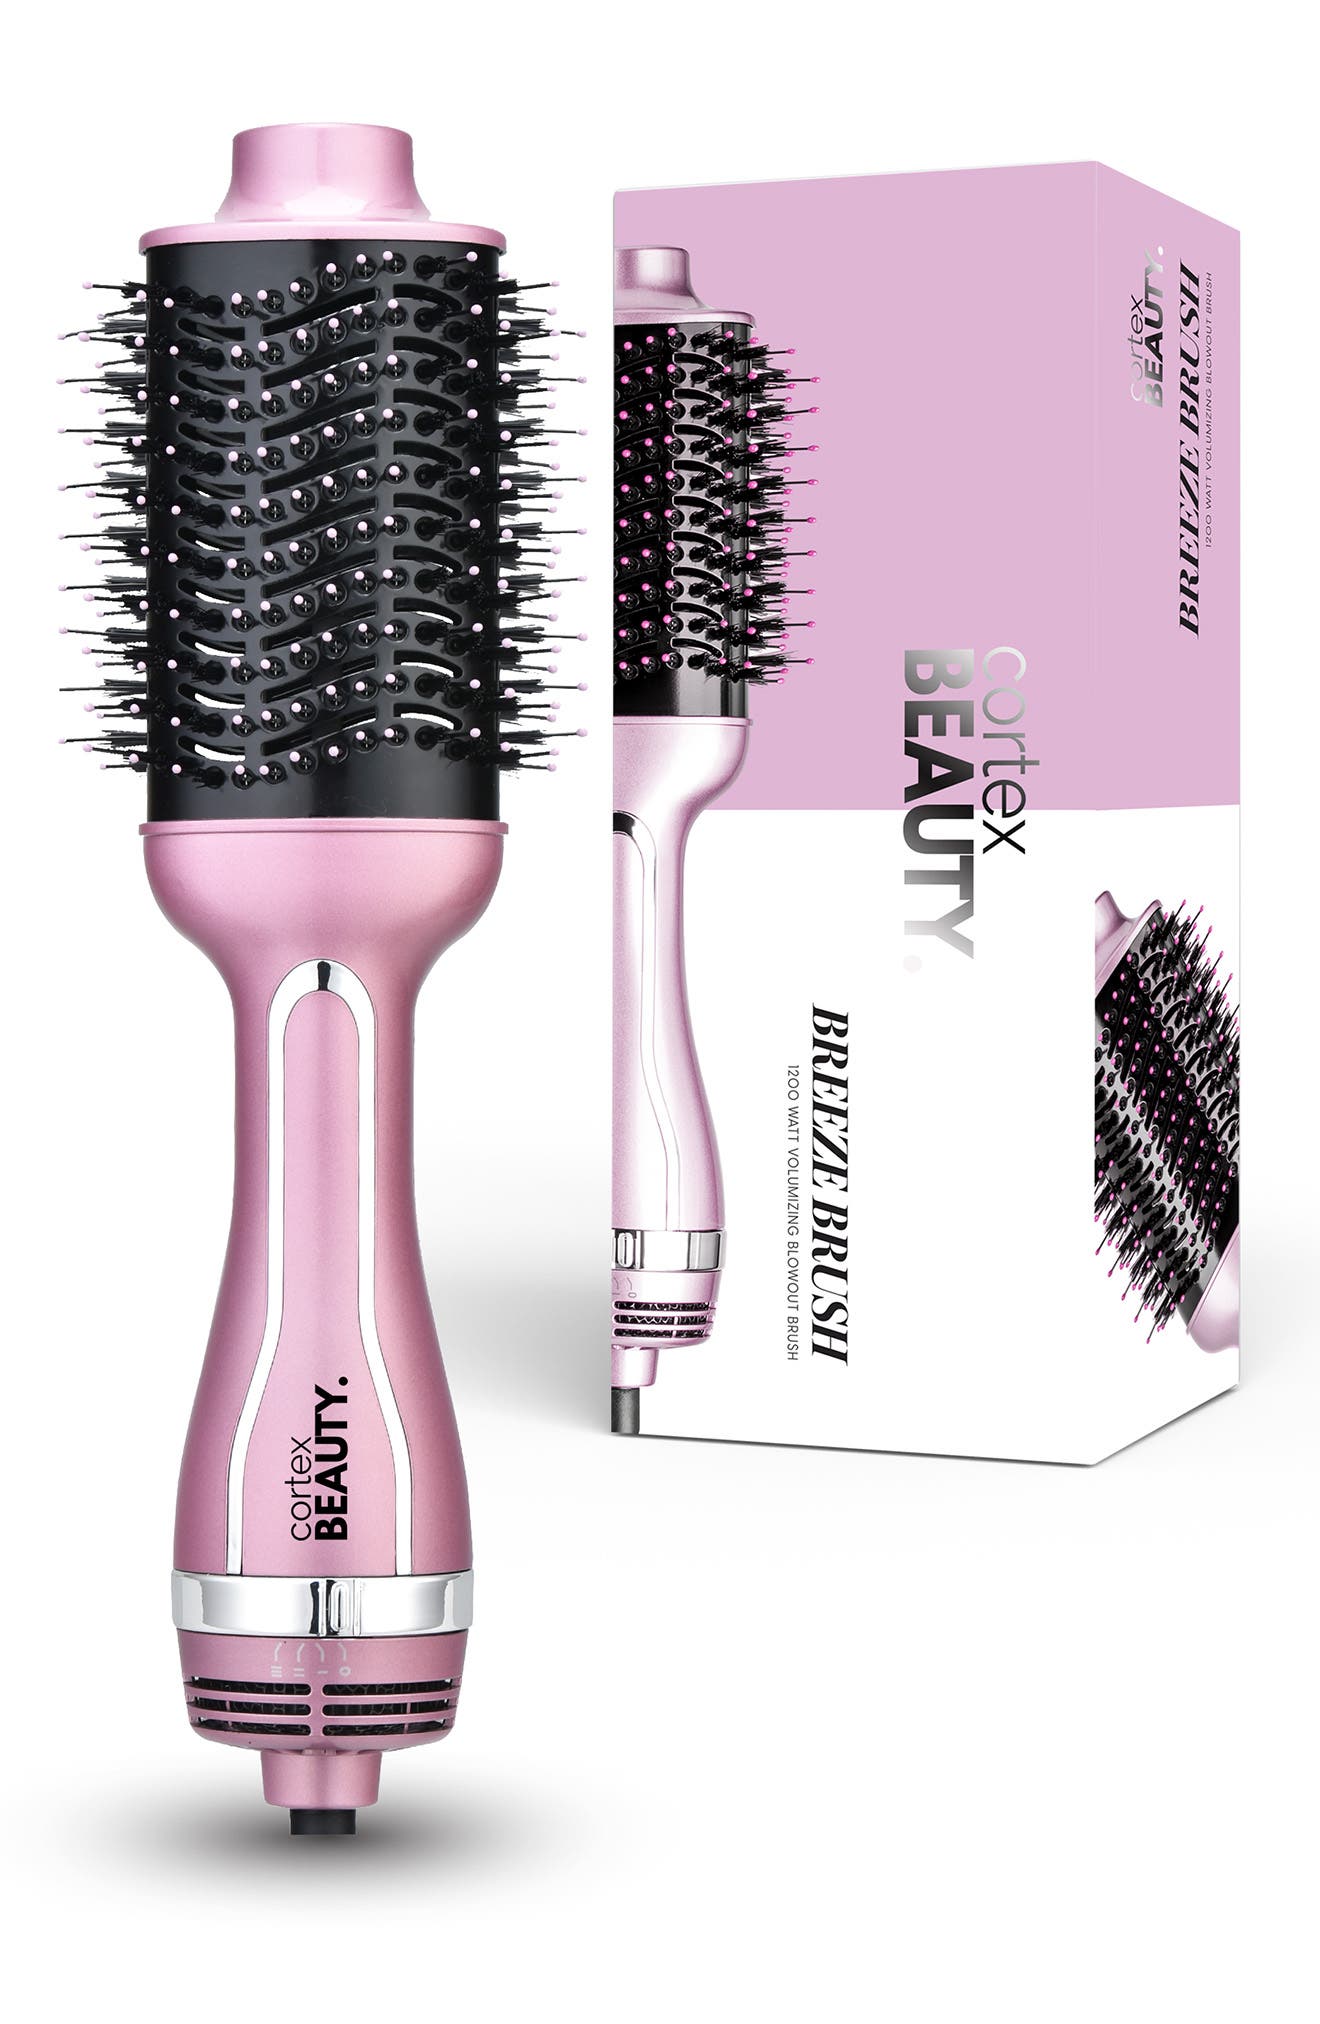 Cortex Usa Cortex Beauty Breeze Brush 1200w Hair Dryer Brush In Light/pastel Pink